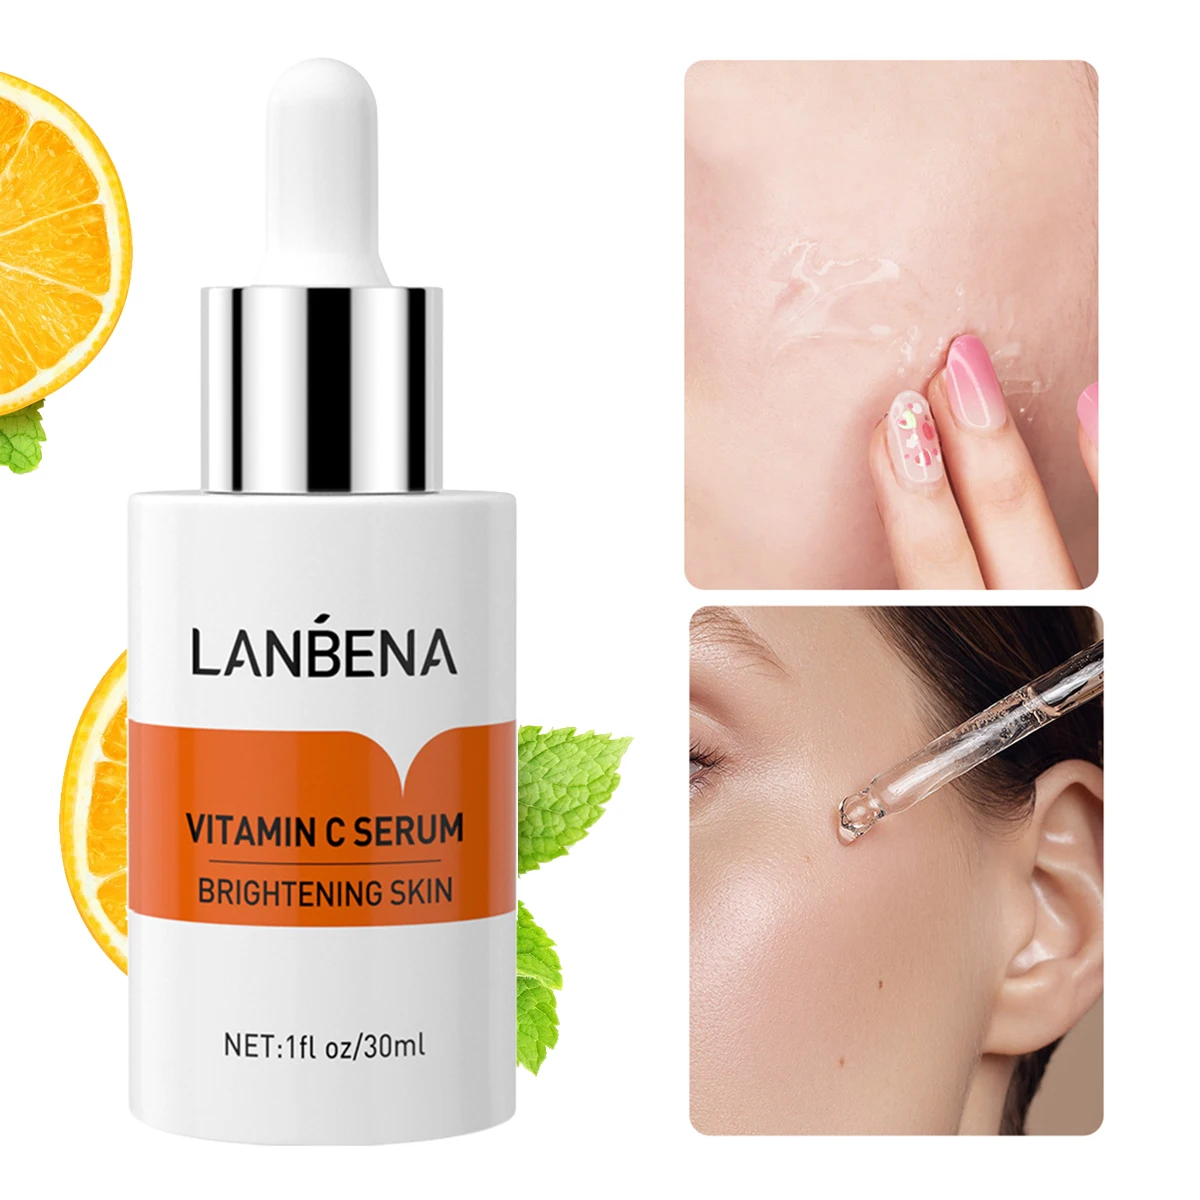 

LANBENA Vitamin C Whitening Face Serum Lighten Spots Brightening Facial Skin Essence Fade Dark Spots Remove Freckle Speckle Care